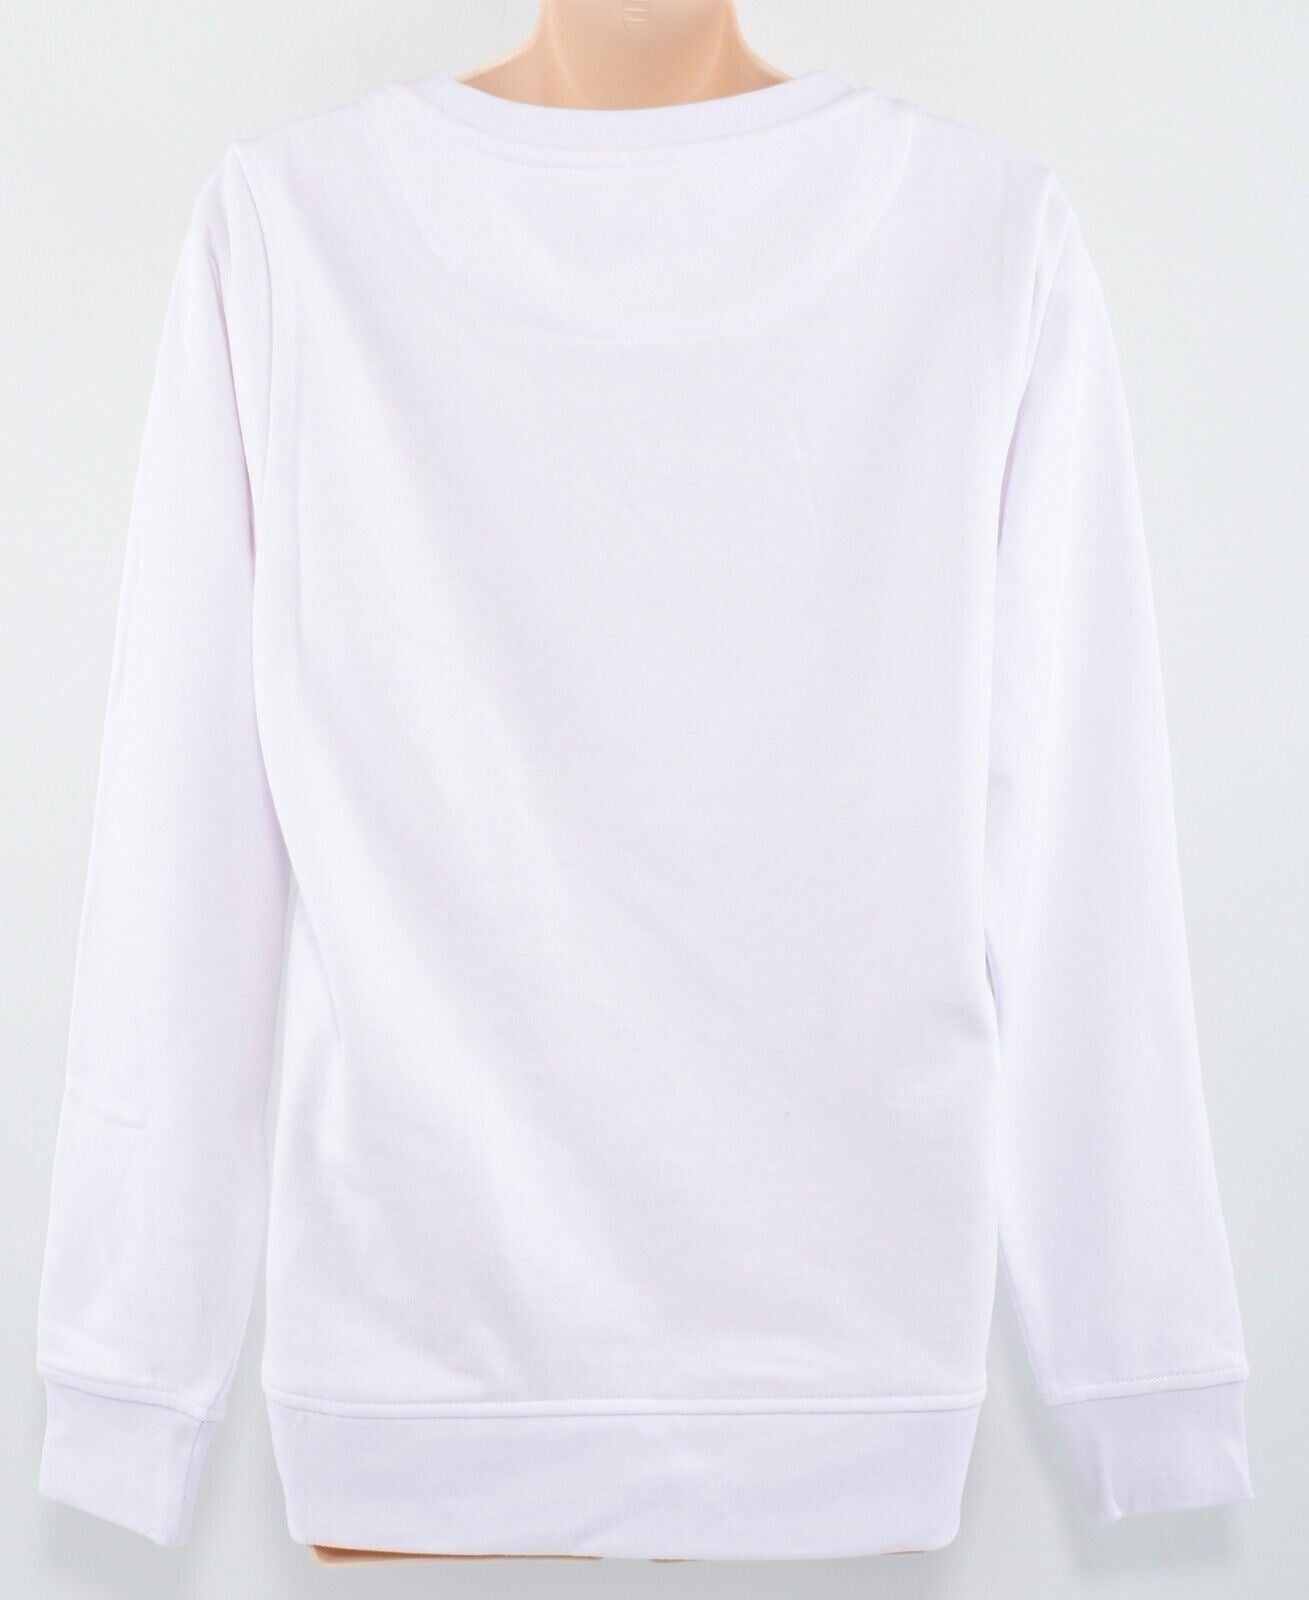 KAPPA Women's Zemin Crew Slim Fit Sweatshirt, White/Black Logo, size XS (UK 8)